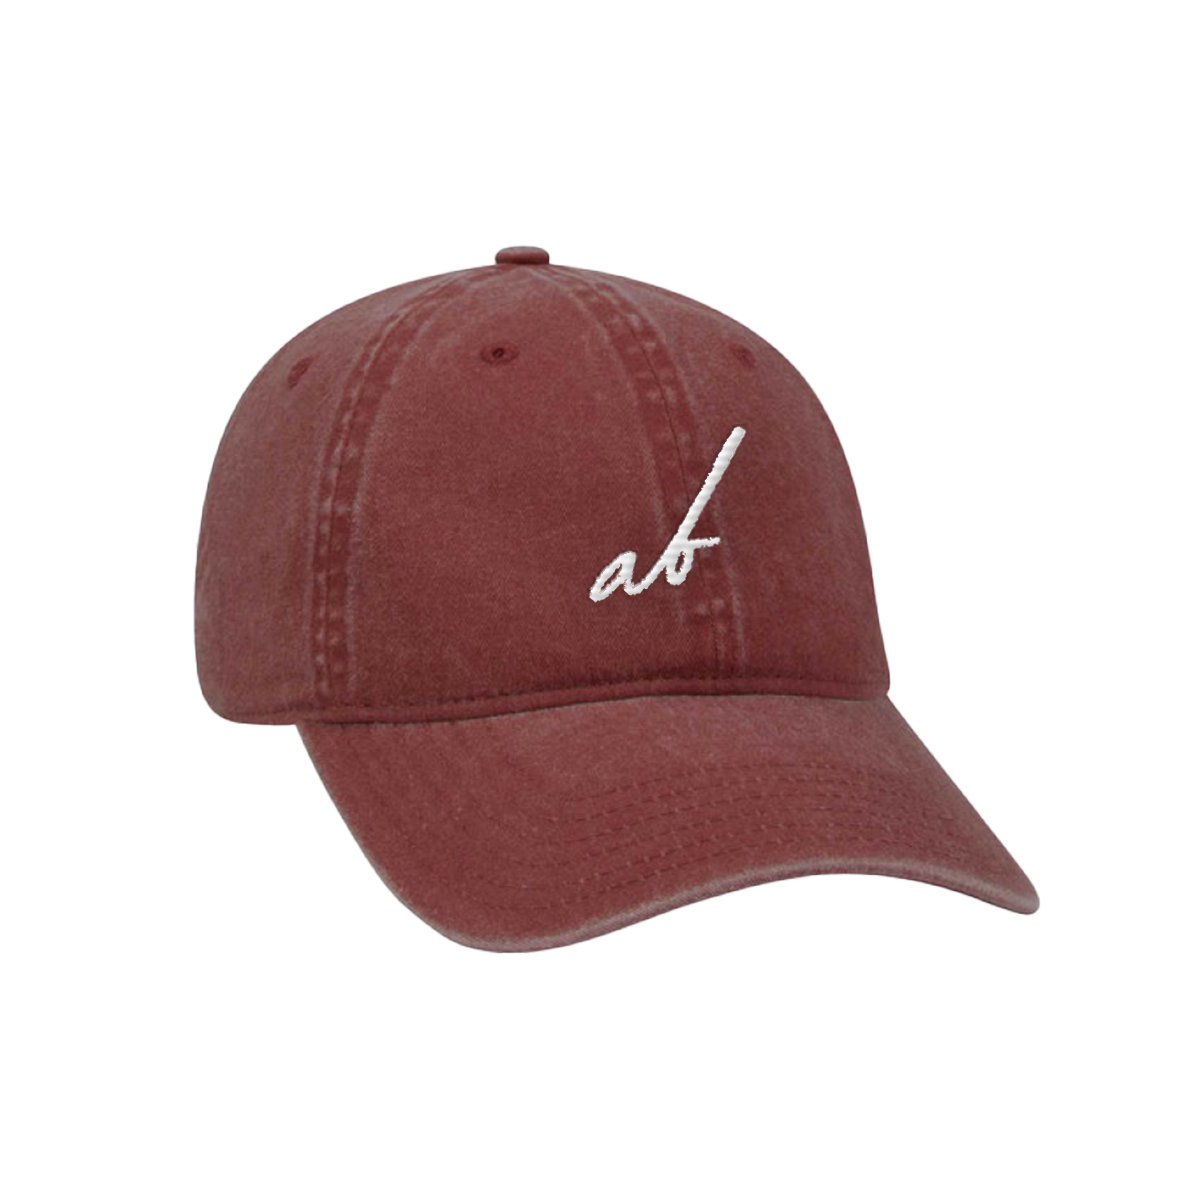 AB Dad Hat